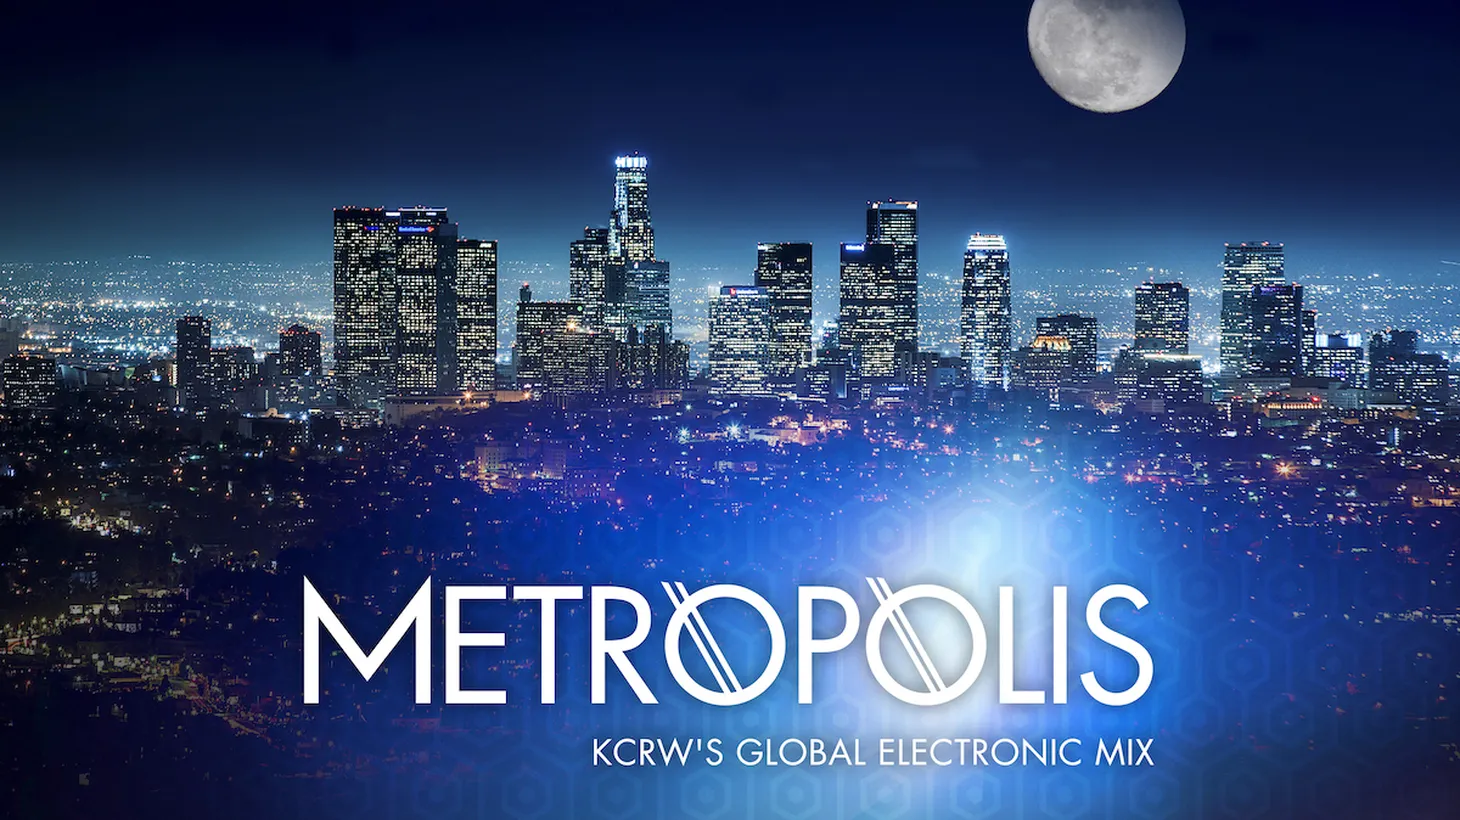 Metropolis playlist, September 17, 2022.